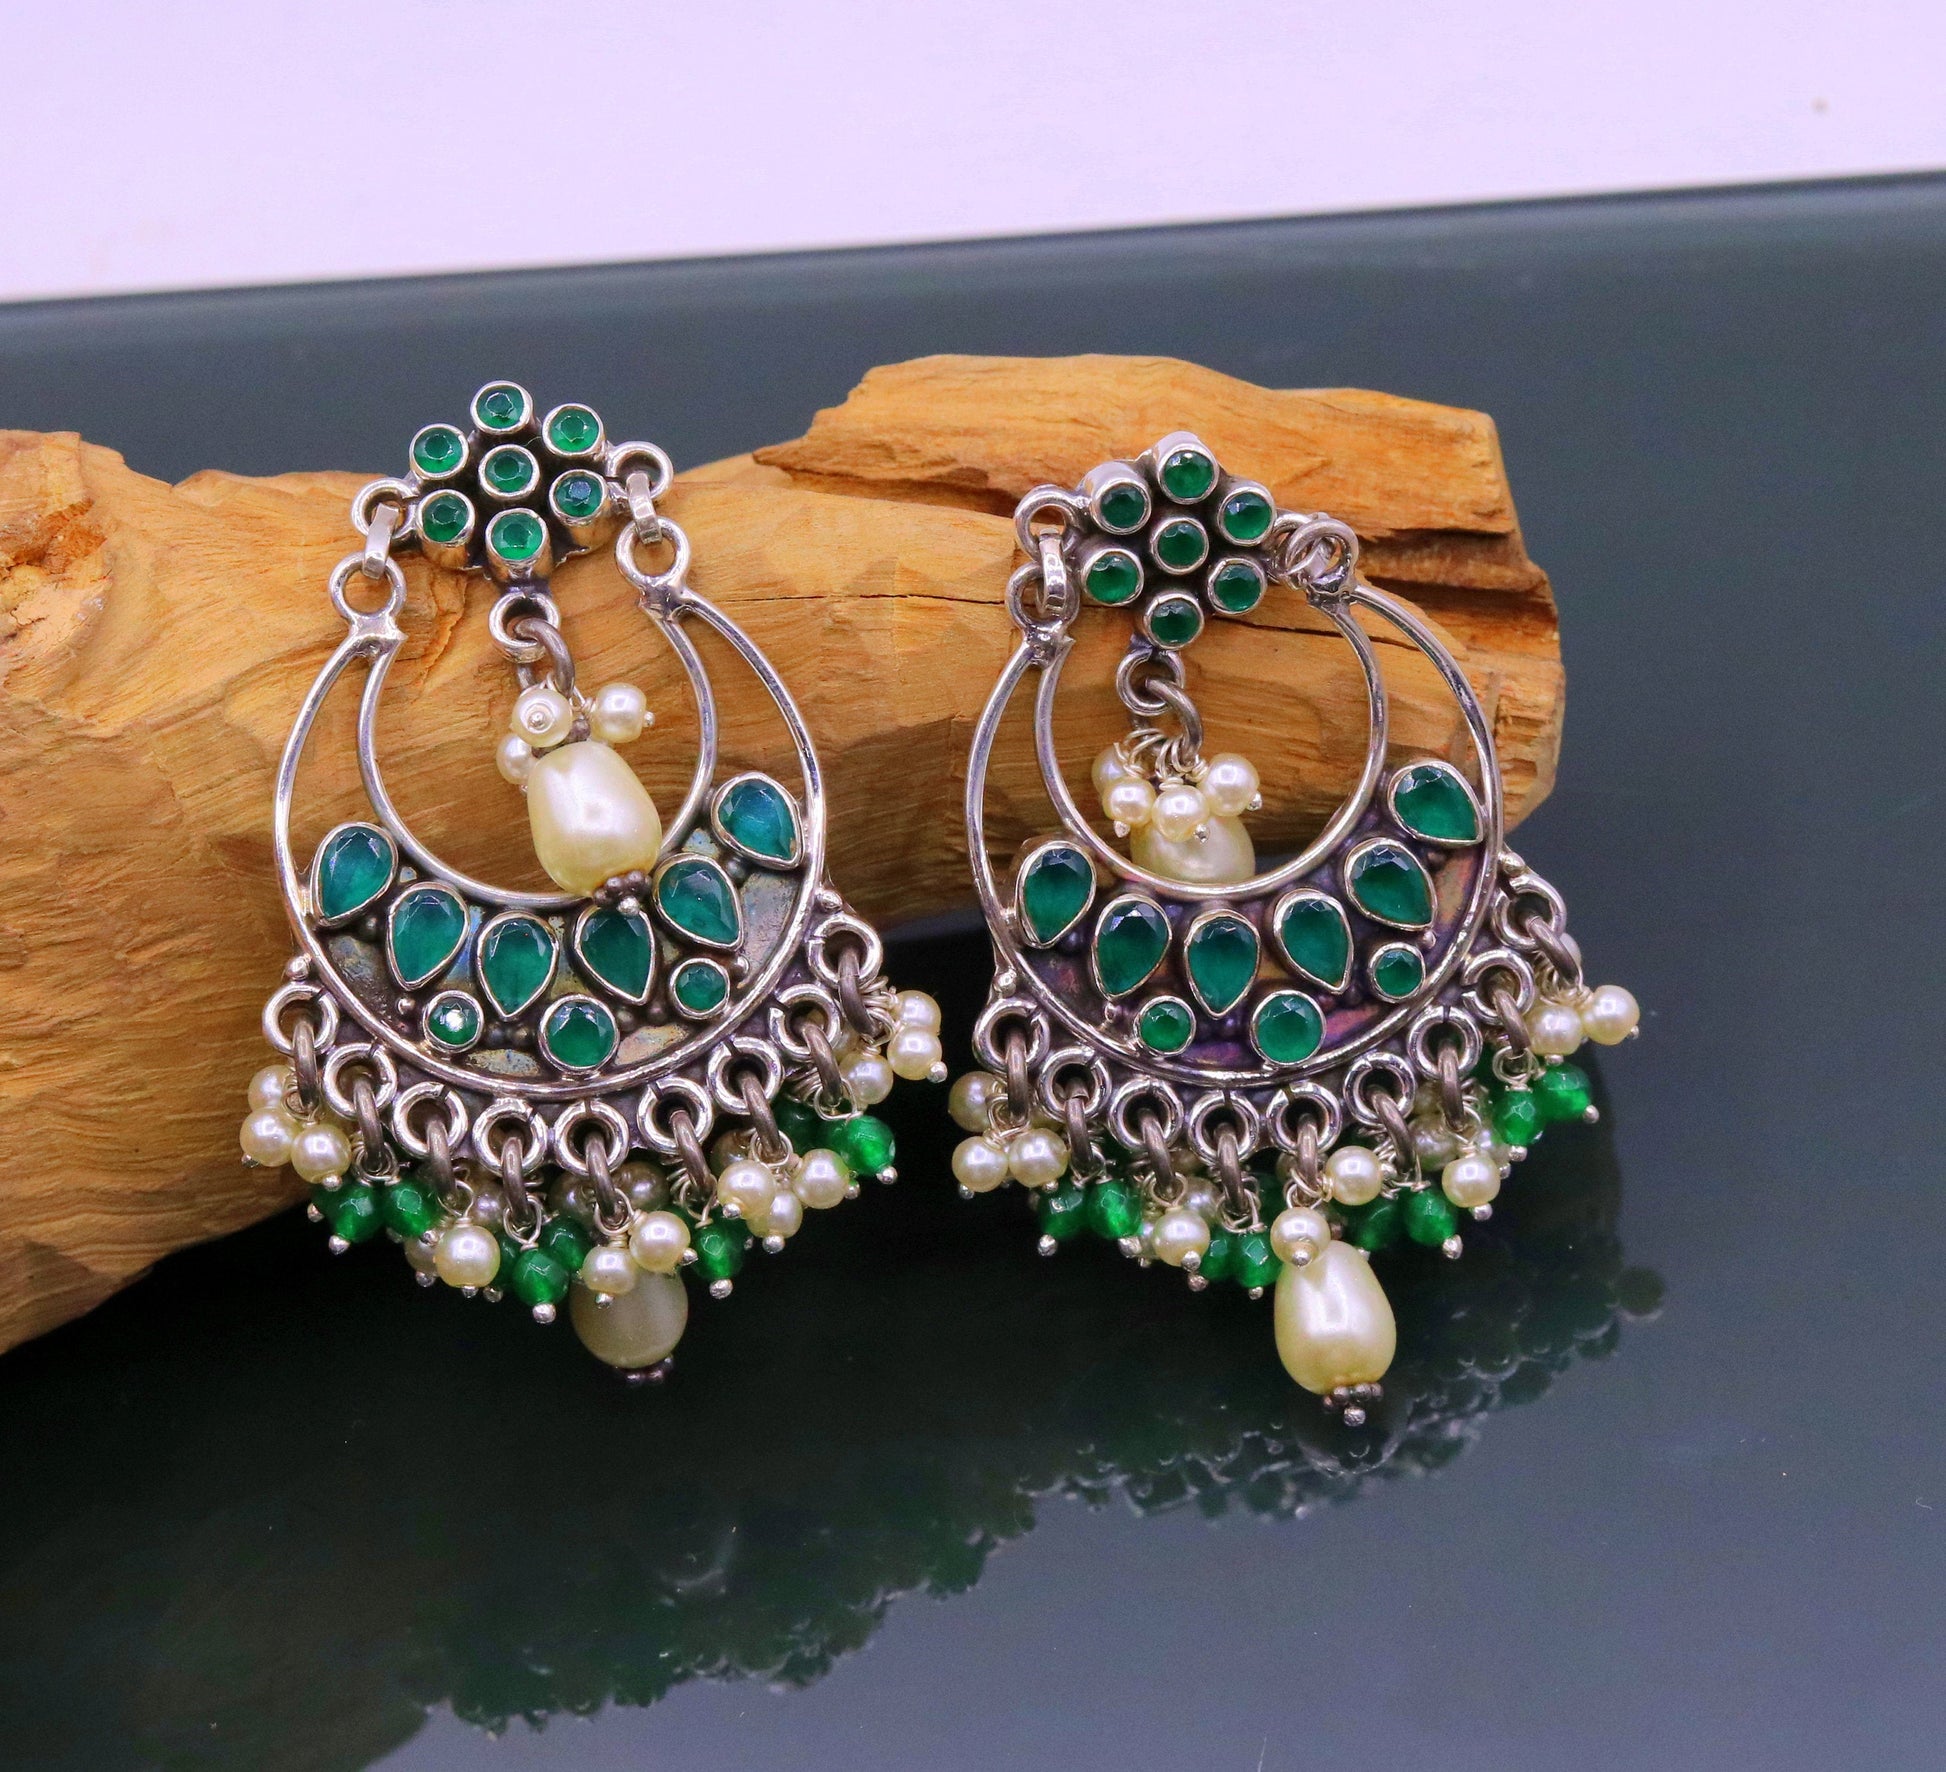 925 sterling silver handmade Green Onyx stone stud earring drop dangling, best design charm earrings hanging tiny pearl tribal jewelry s714 - TRIBAL ORNAMENTS